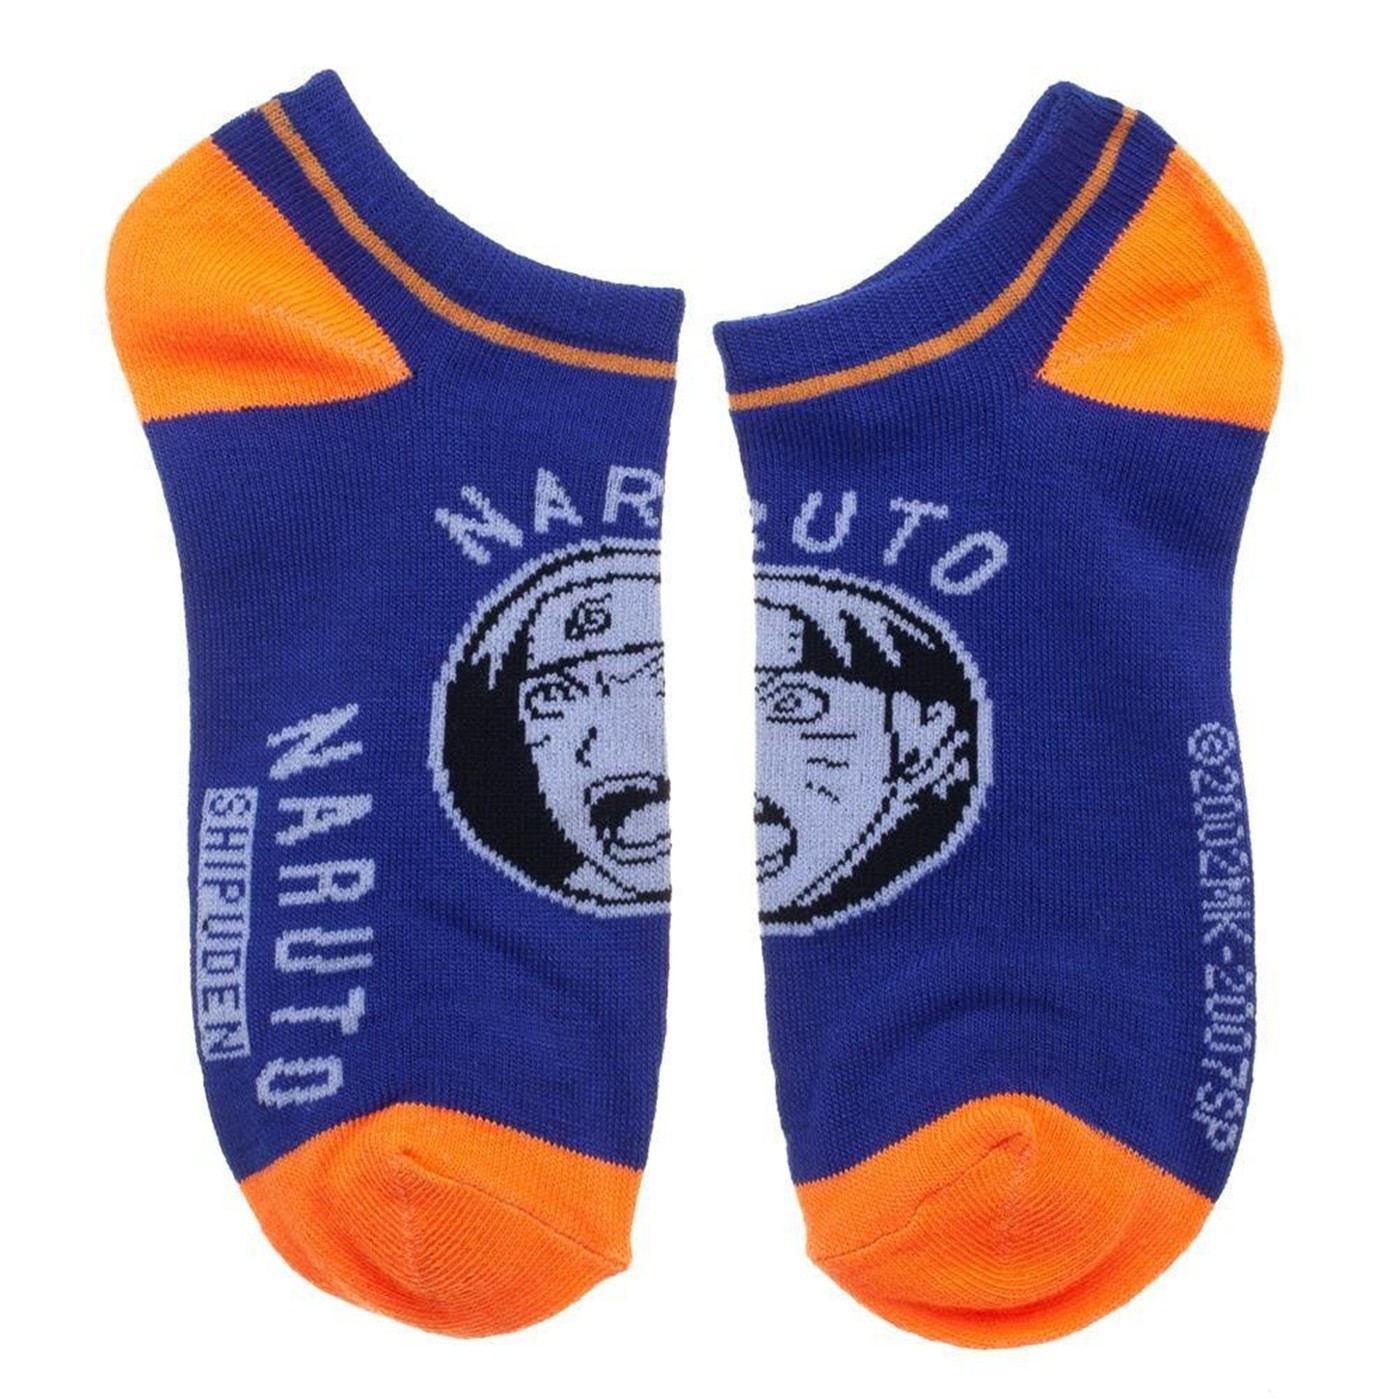 Naruto Five Pack Ankle Socks Set